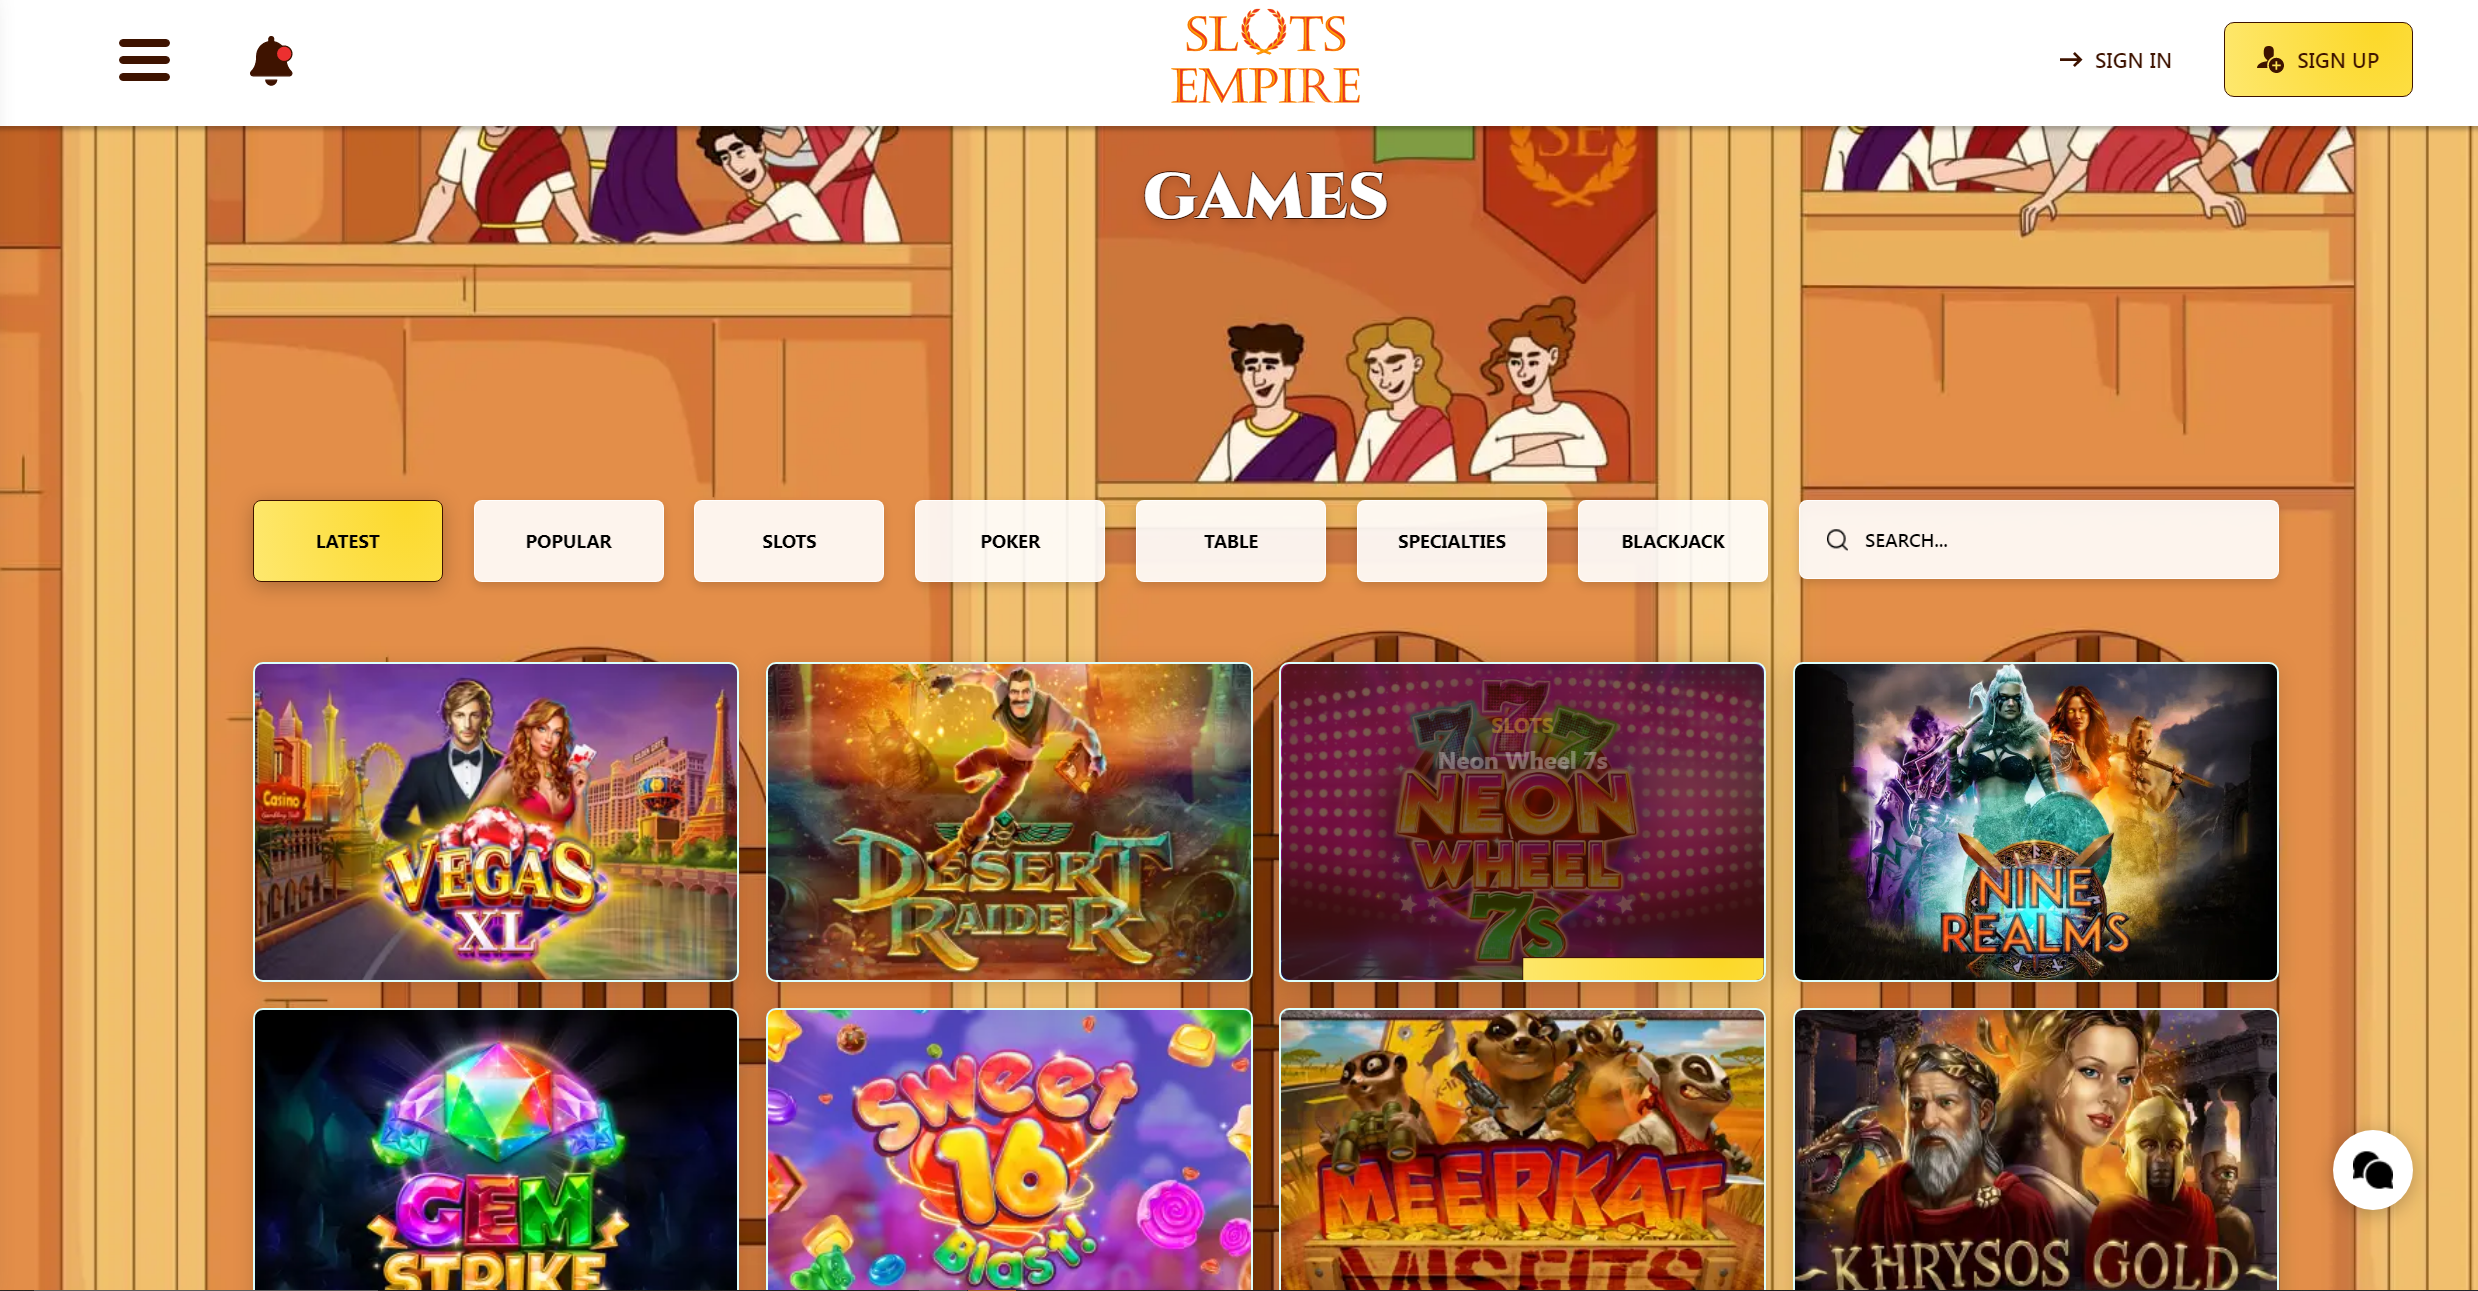 Slots Empire Games Selection